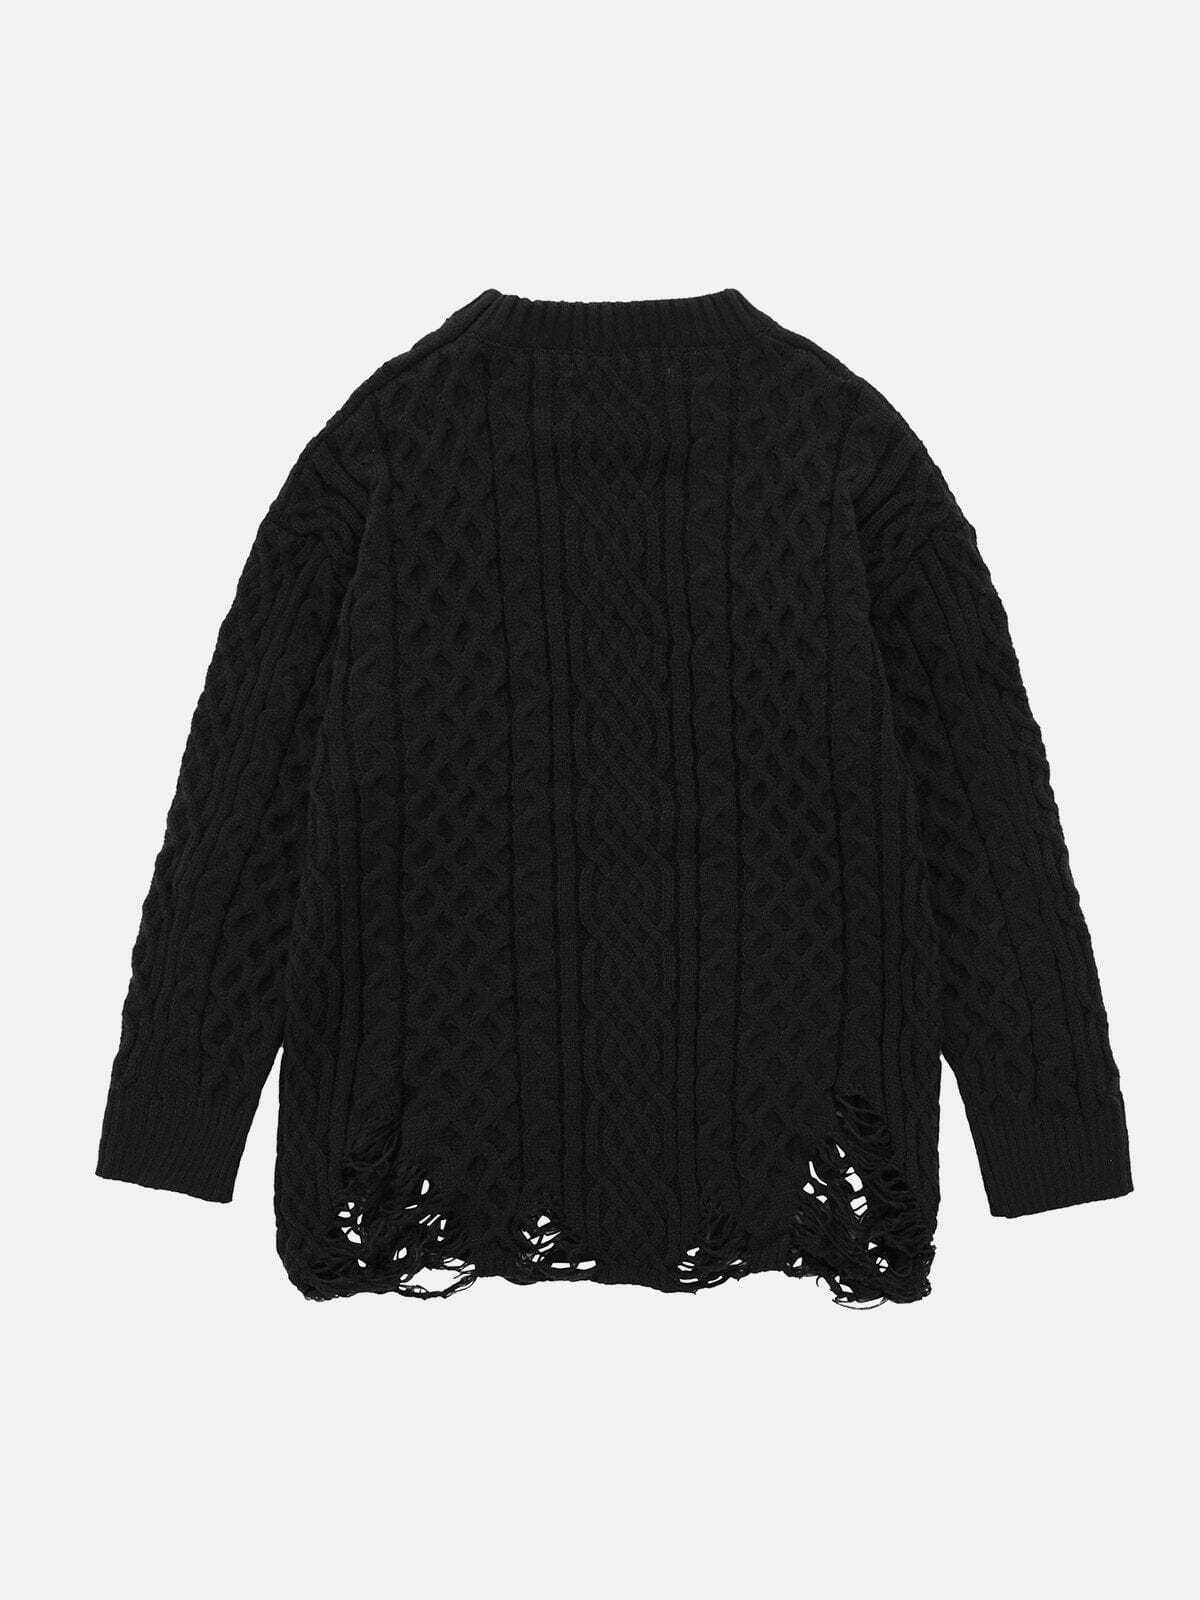 vintage hole knit sweater edgy y2k fashion icon 7849